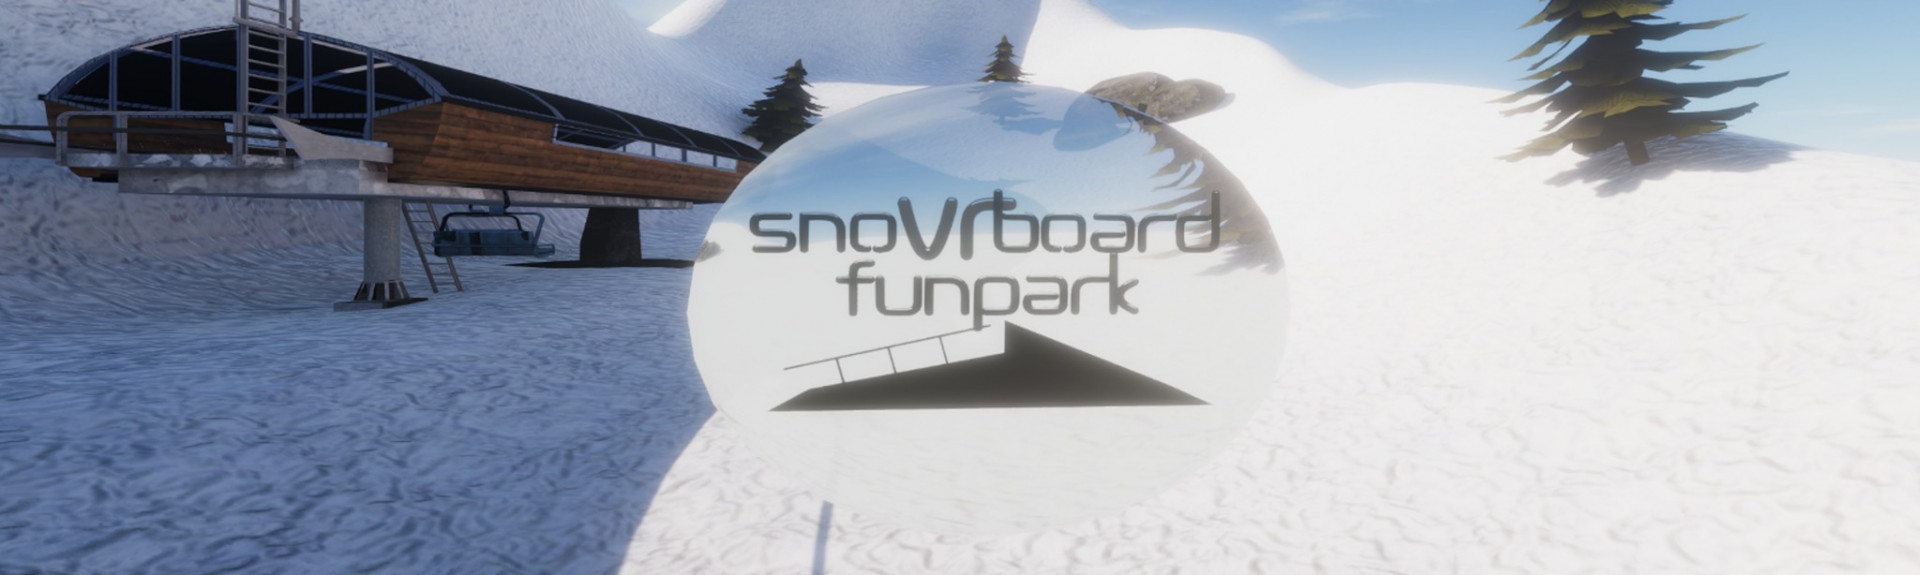 Snowboard Funpark